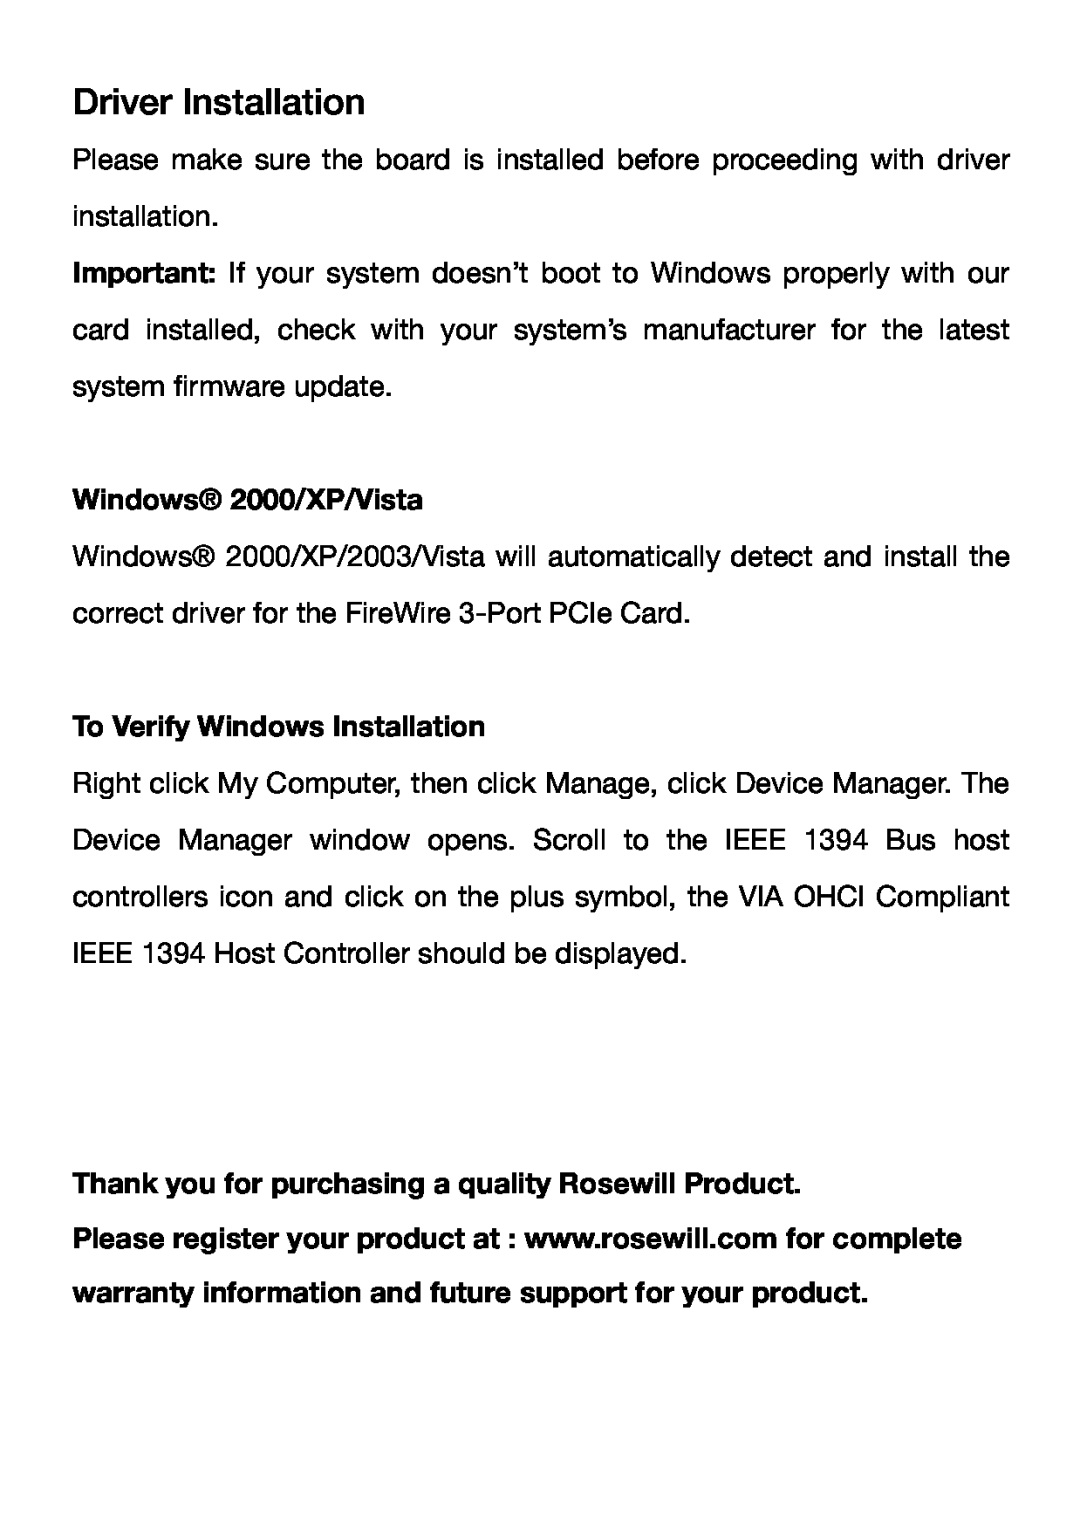 Rosewill RC504 user manual Driver Installation, Windows 2000/XP/Vista, To Verify Windows Installation 